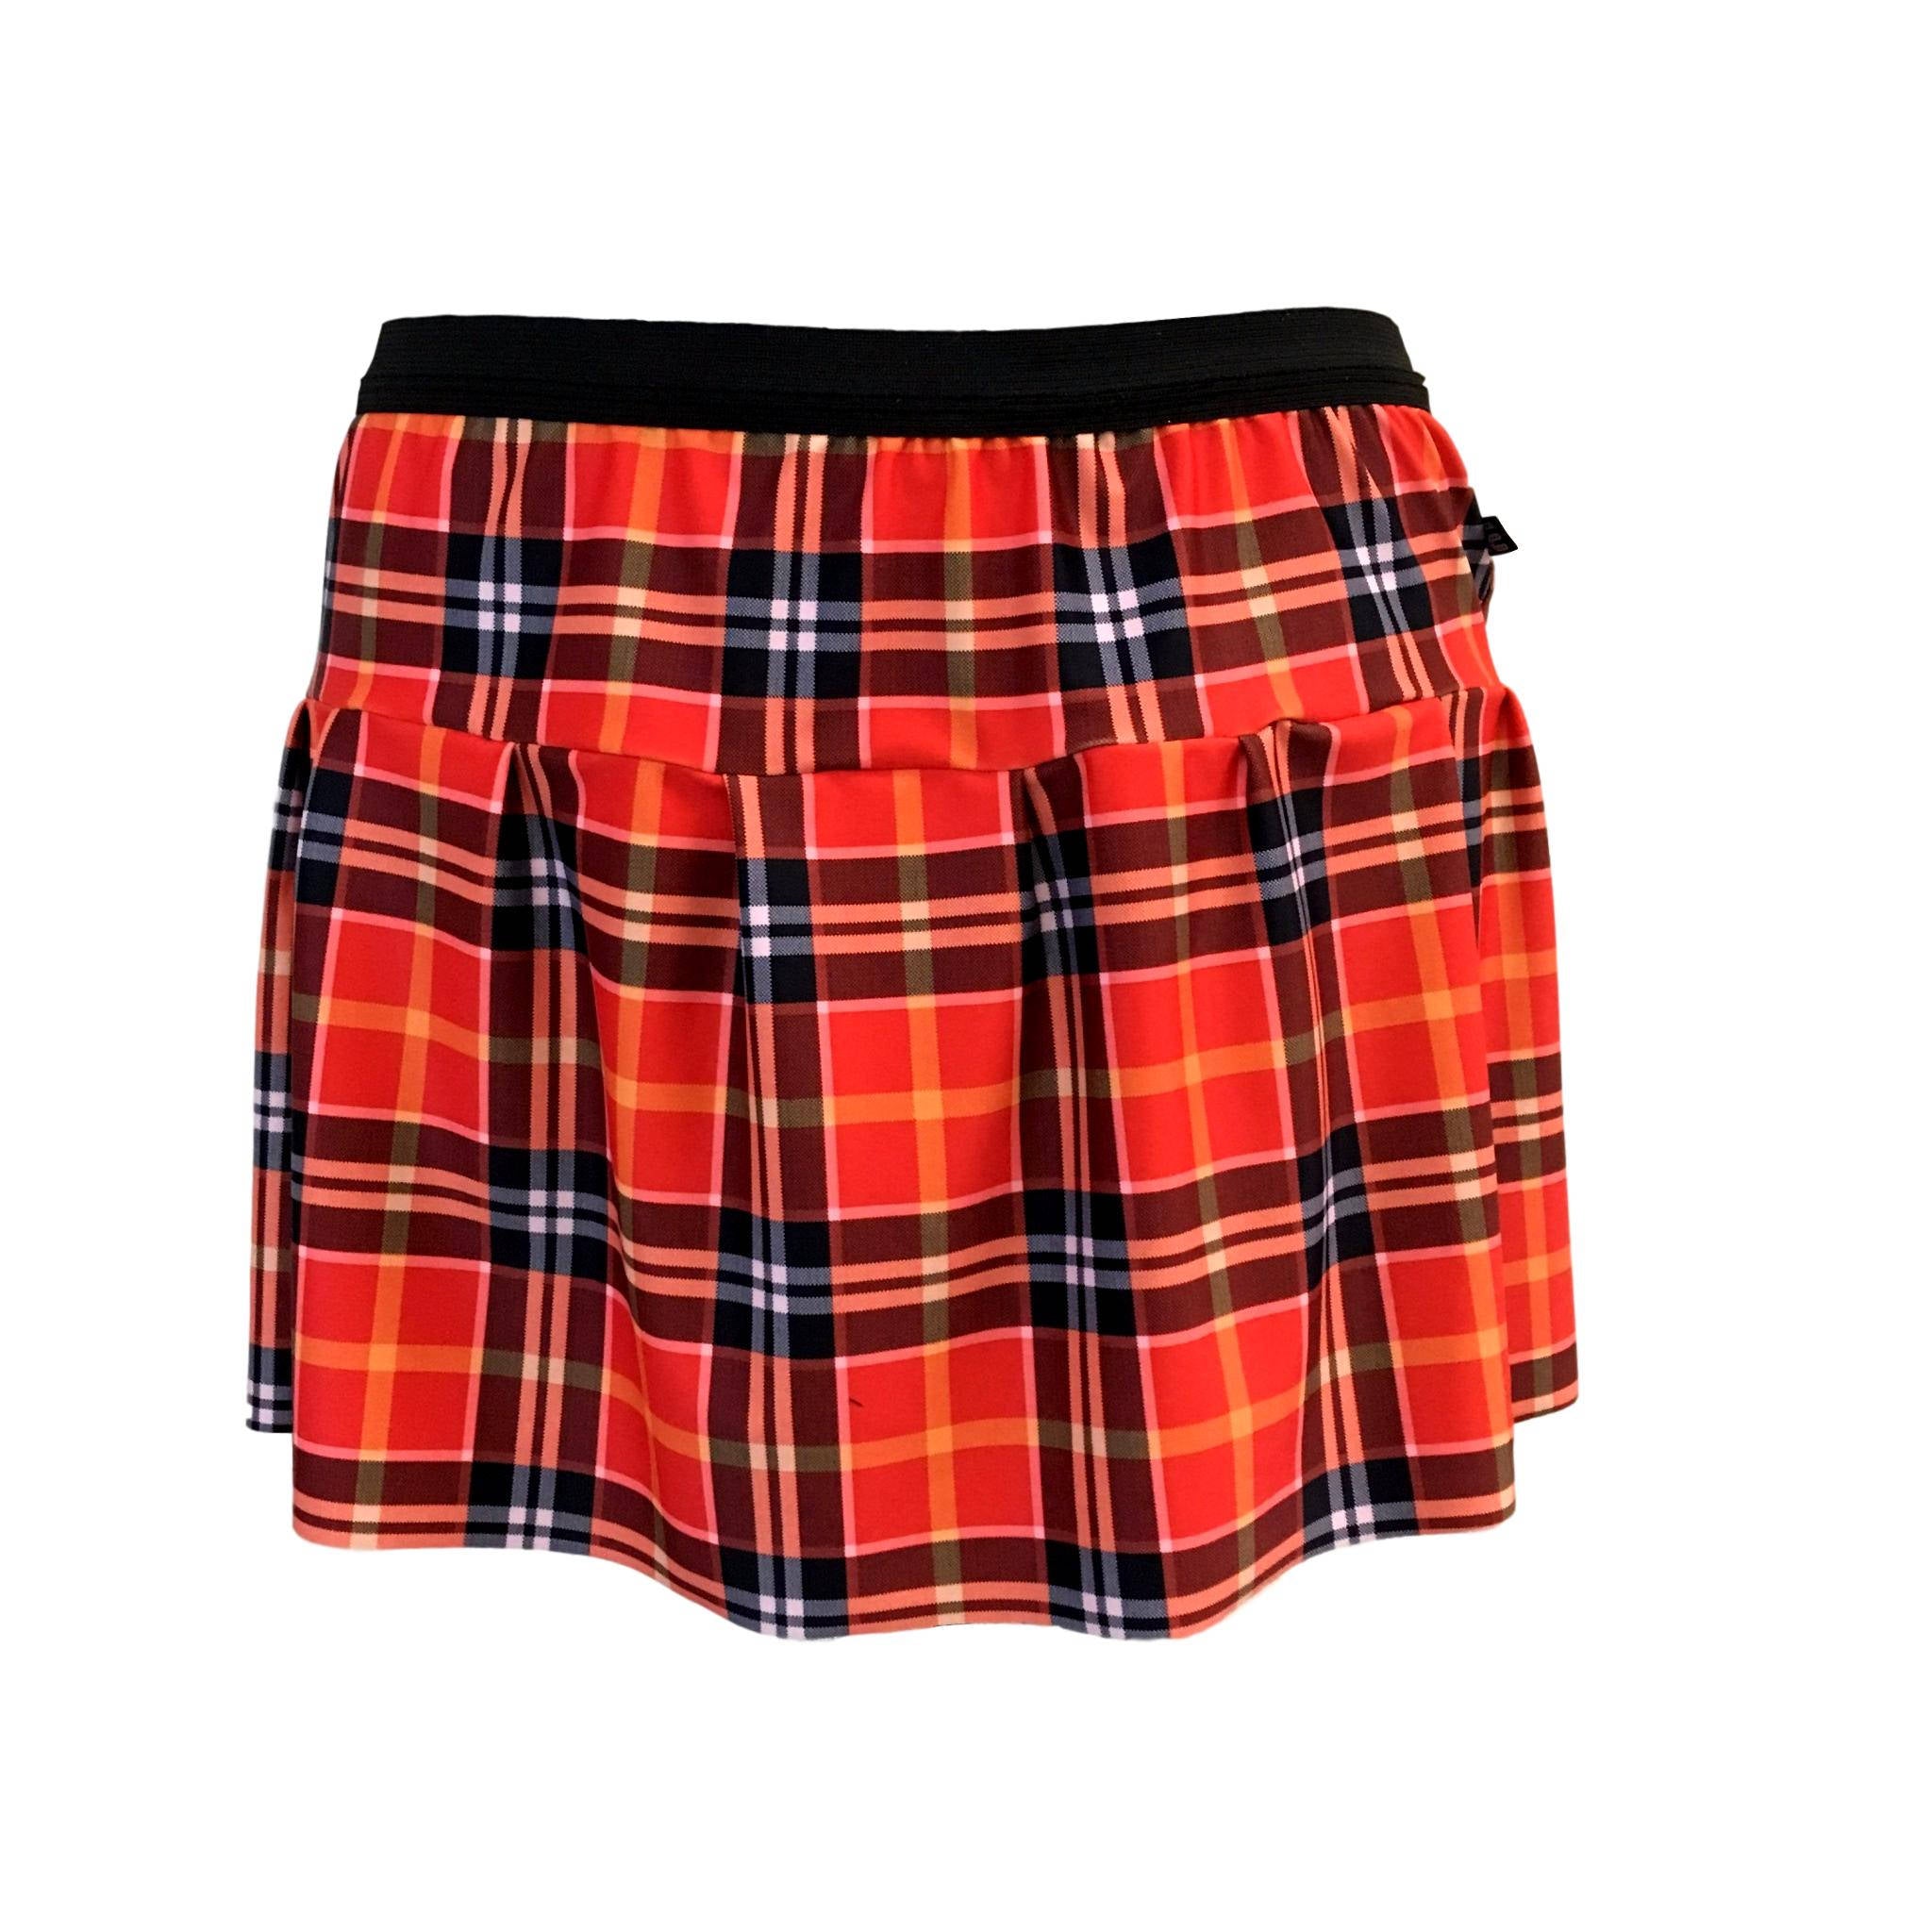 Plaid Red Running Skirt - Rock City Skirts